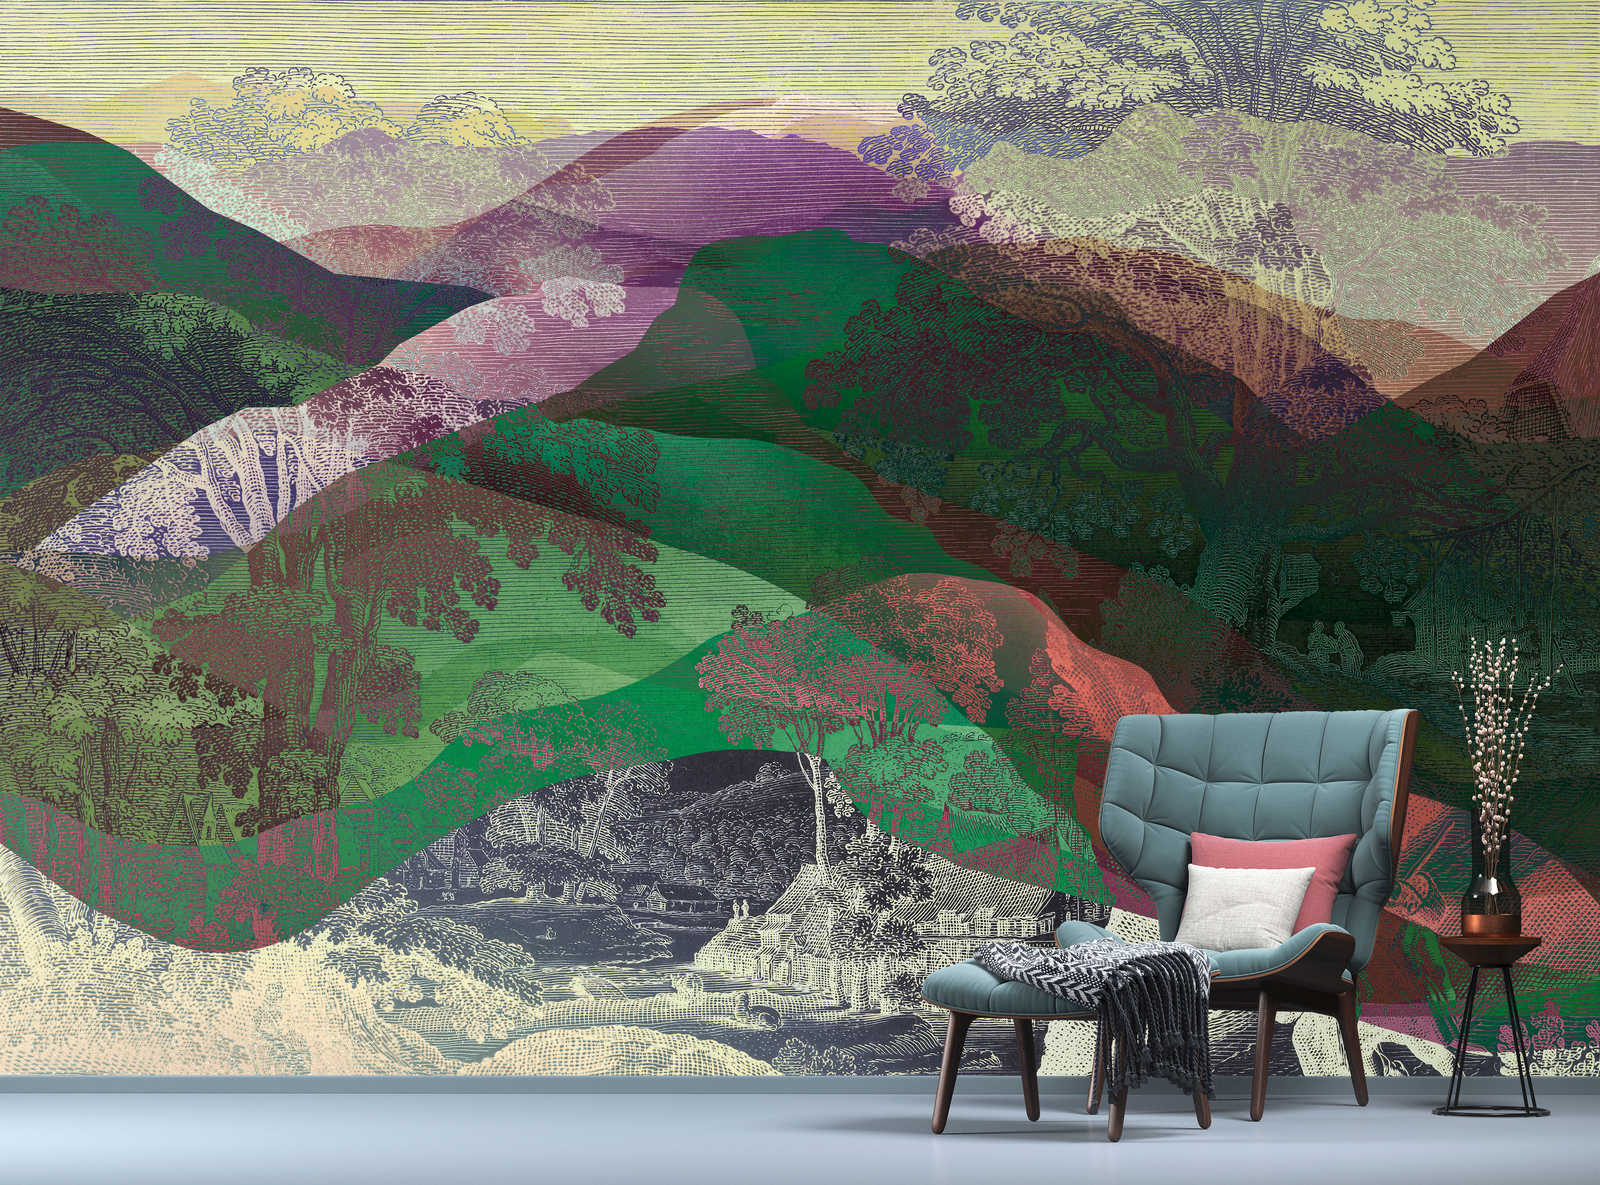             Hidden Valley 1 - mural vintage meets modern mountain landscape
        